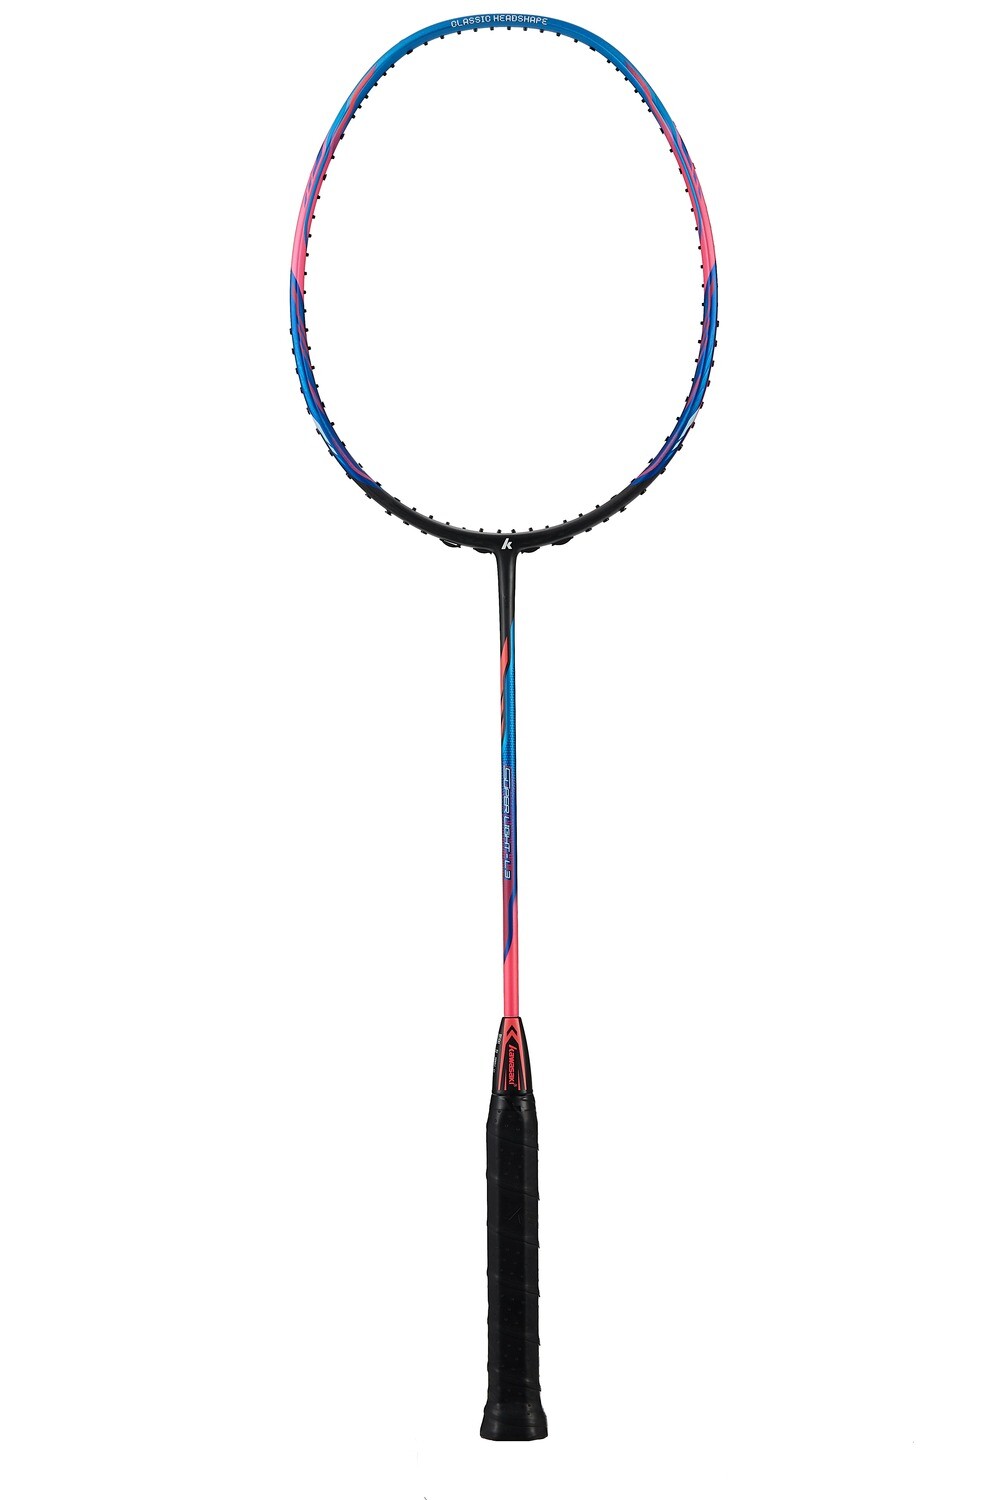 Kawasaki Super Light L3 Badminton Racket - Red